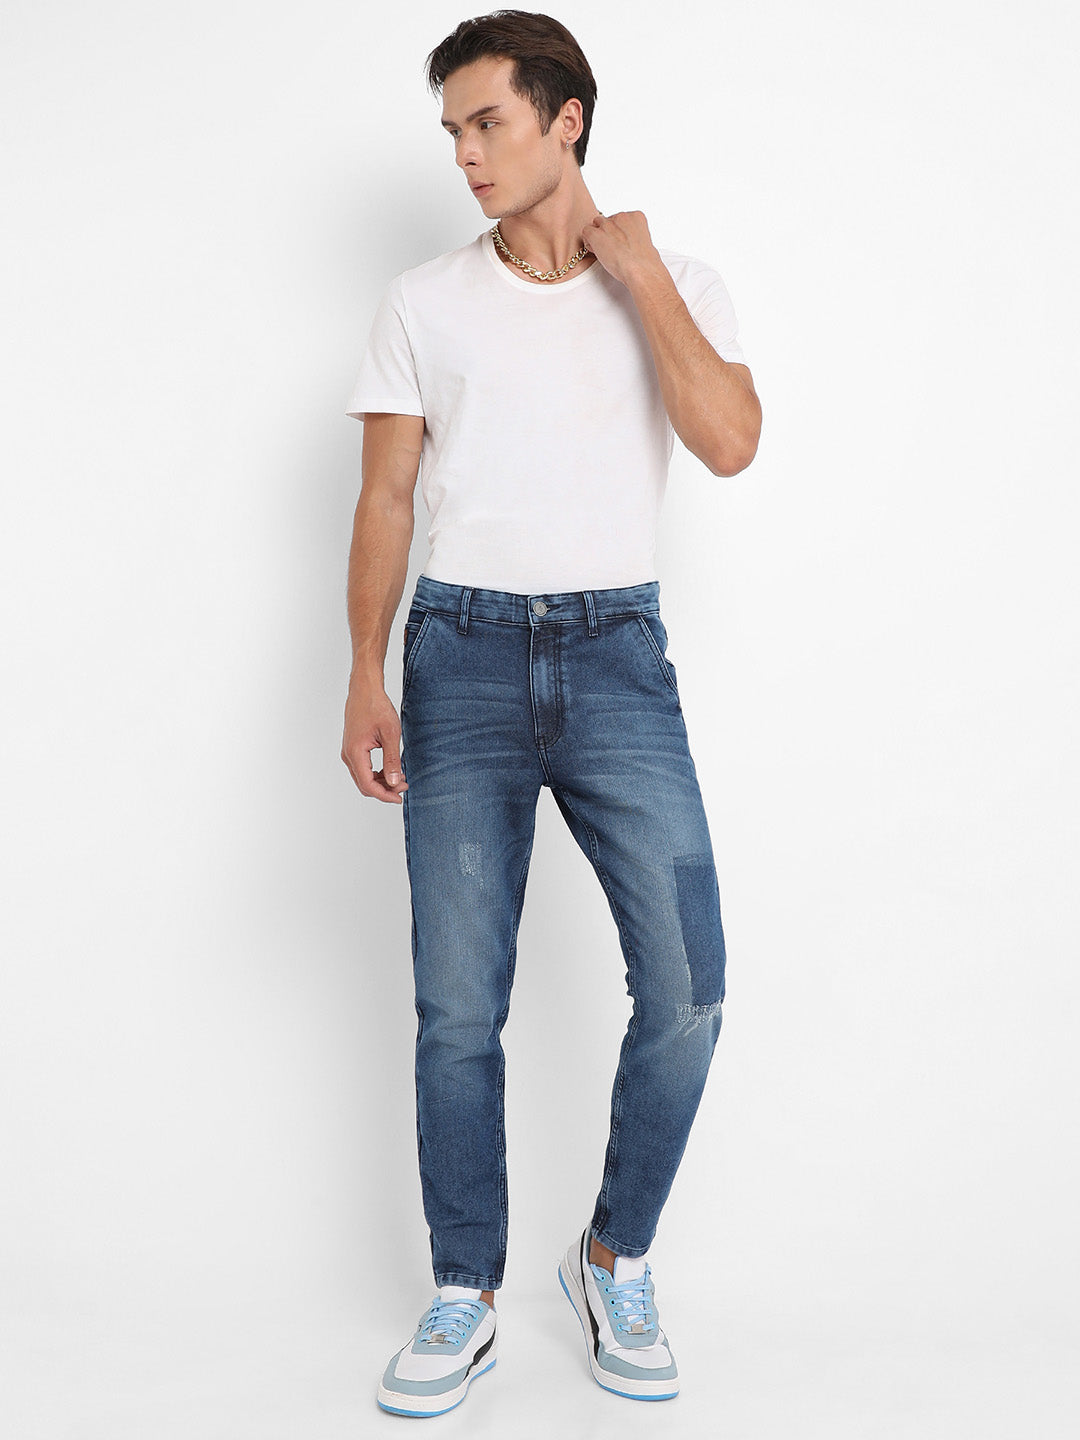 Distressed Patterned Denim Jeans